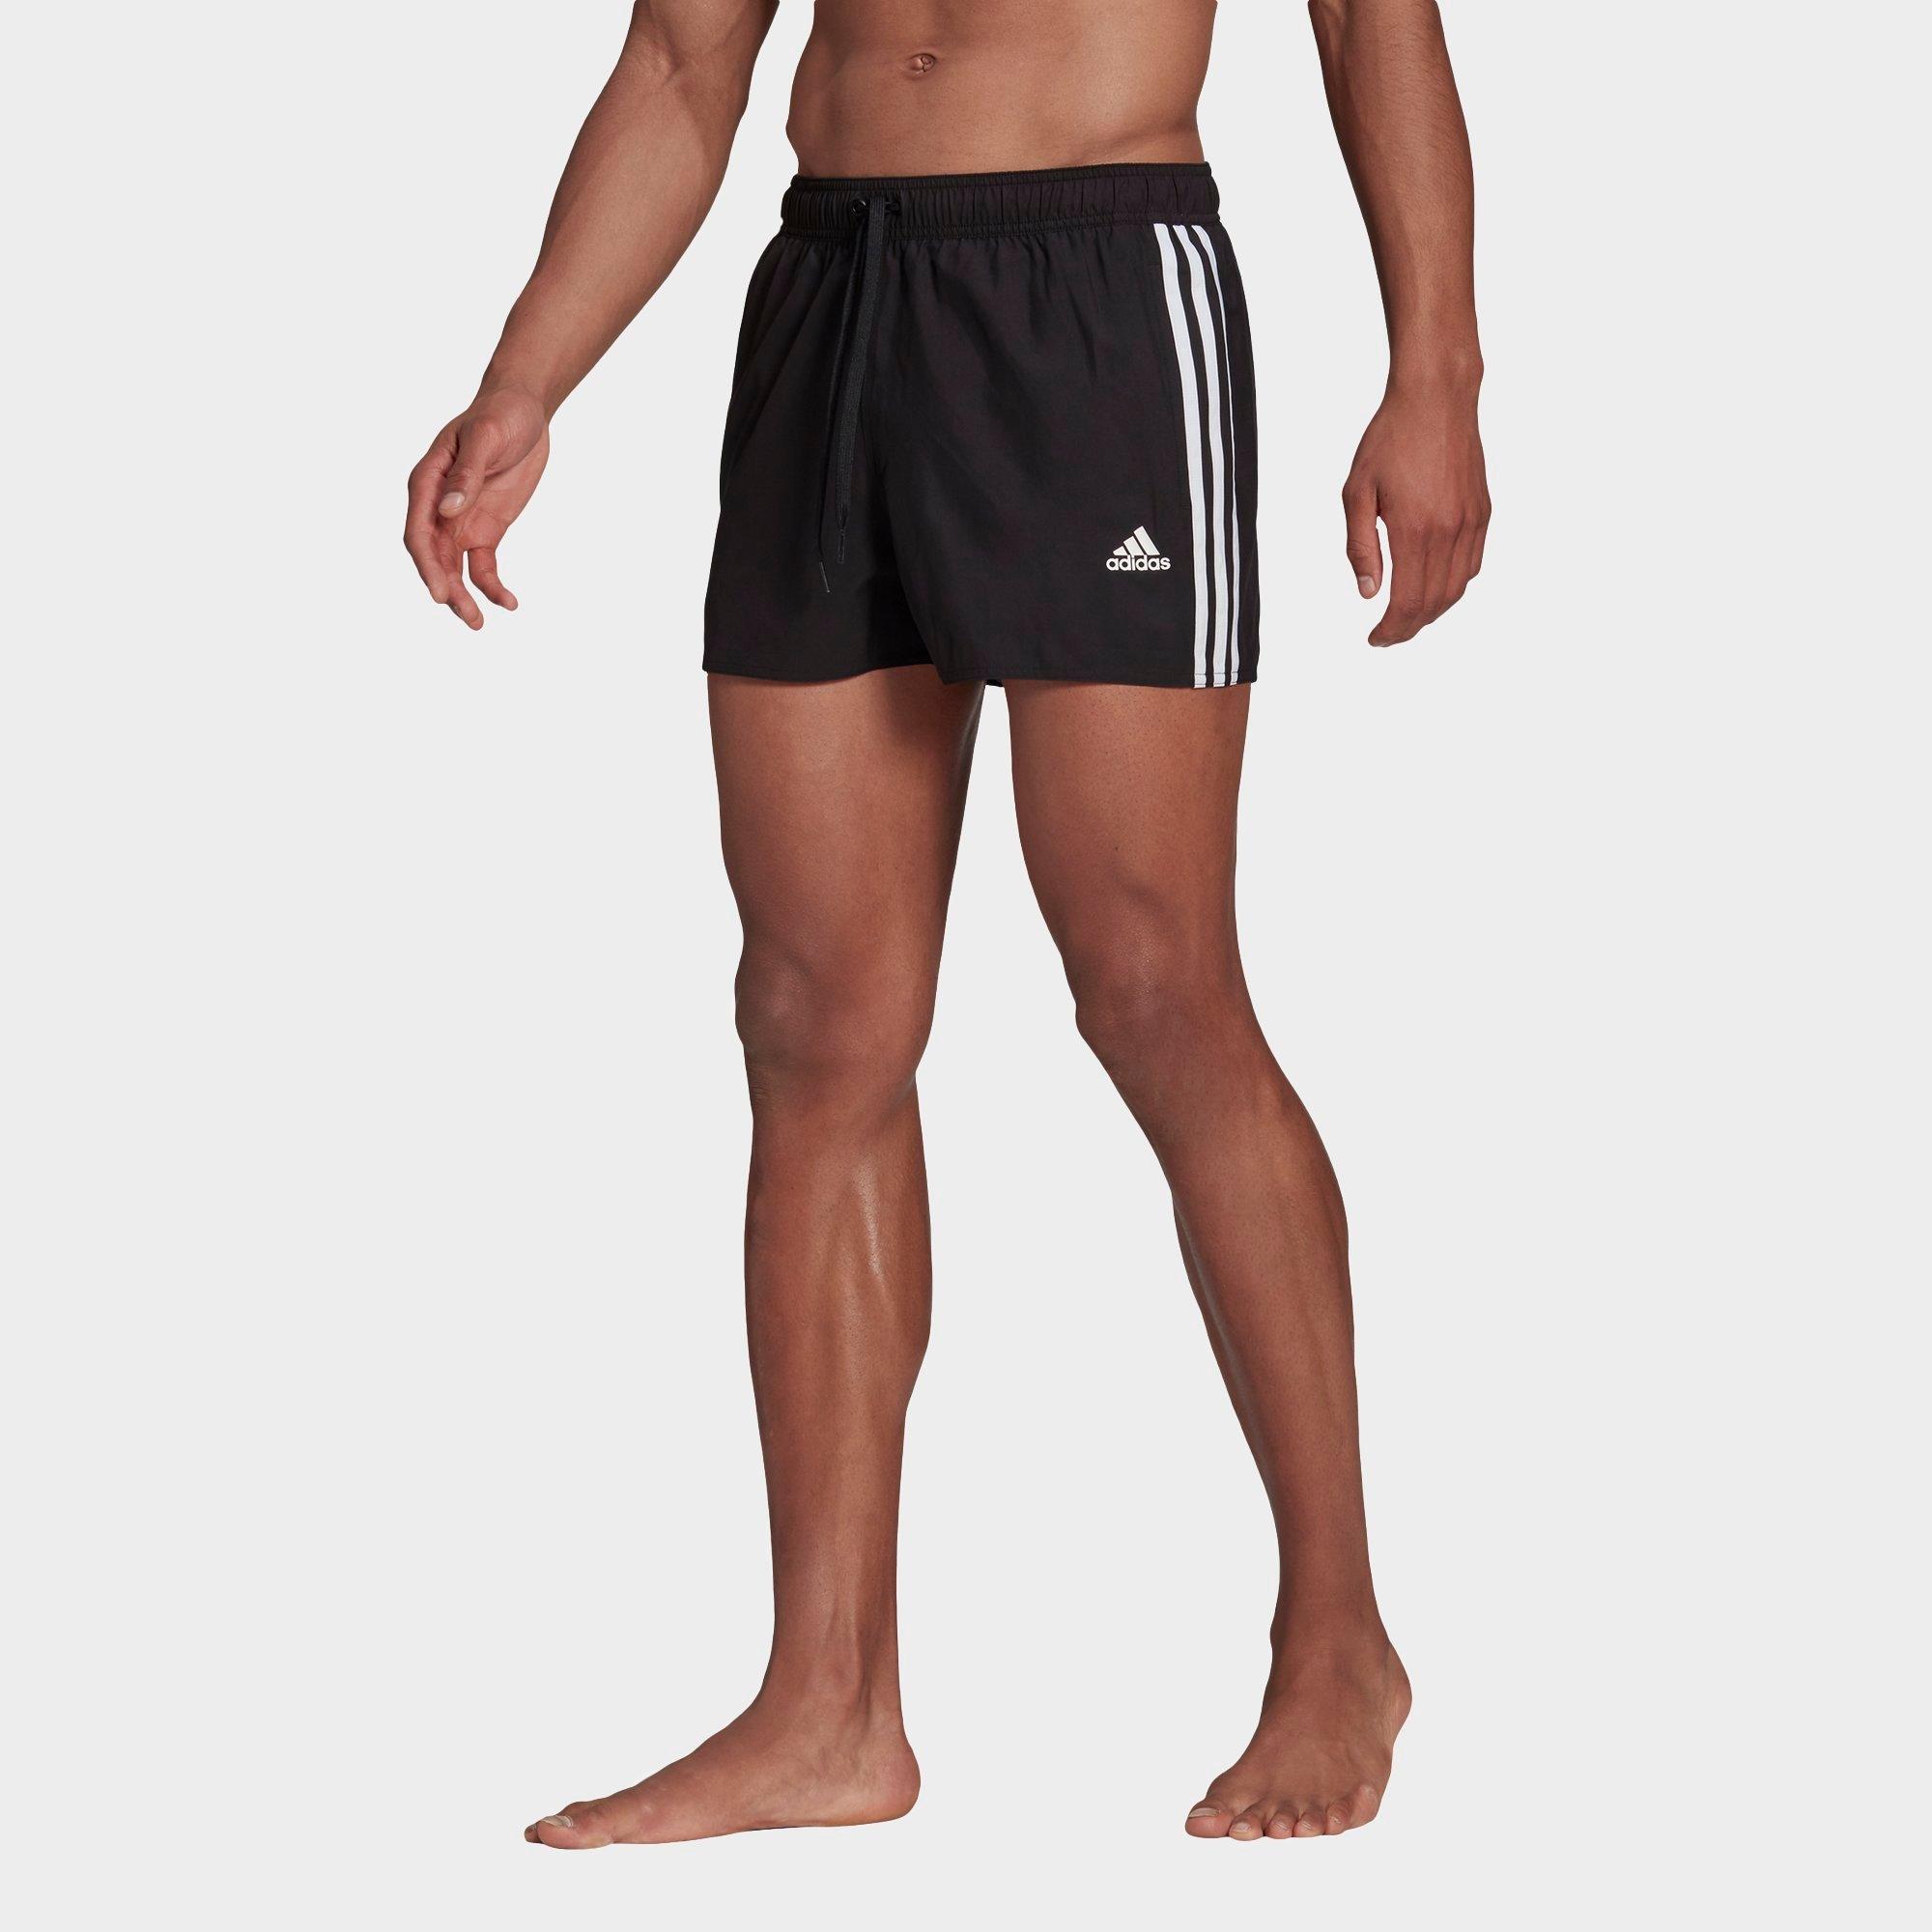 jd sports adidas swim shorts